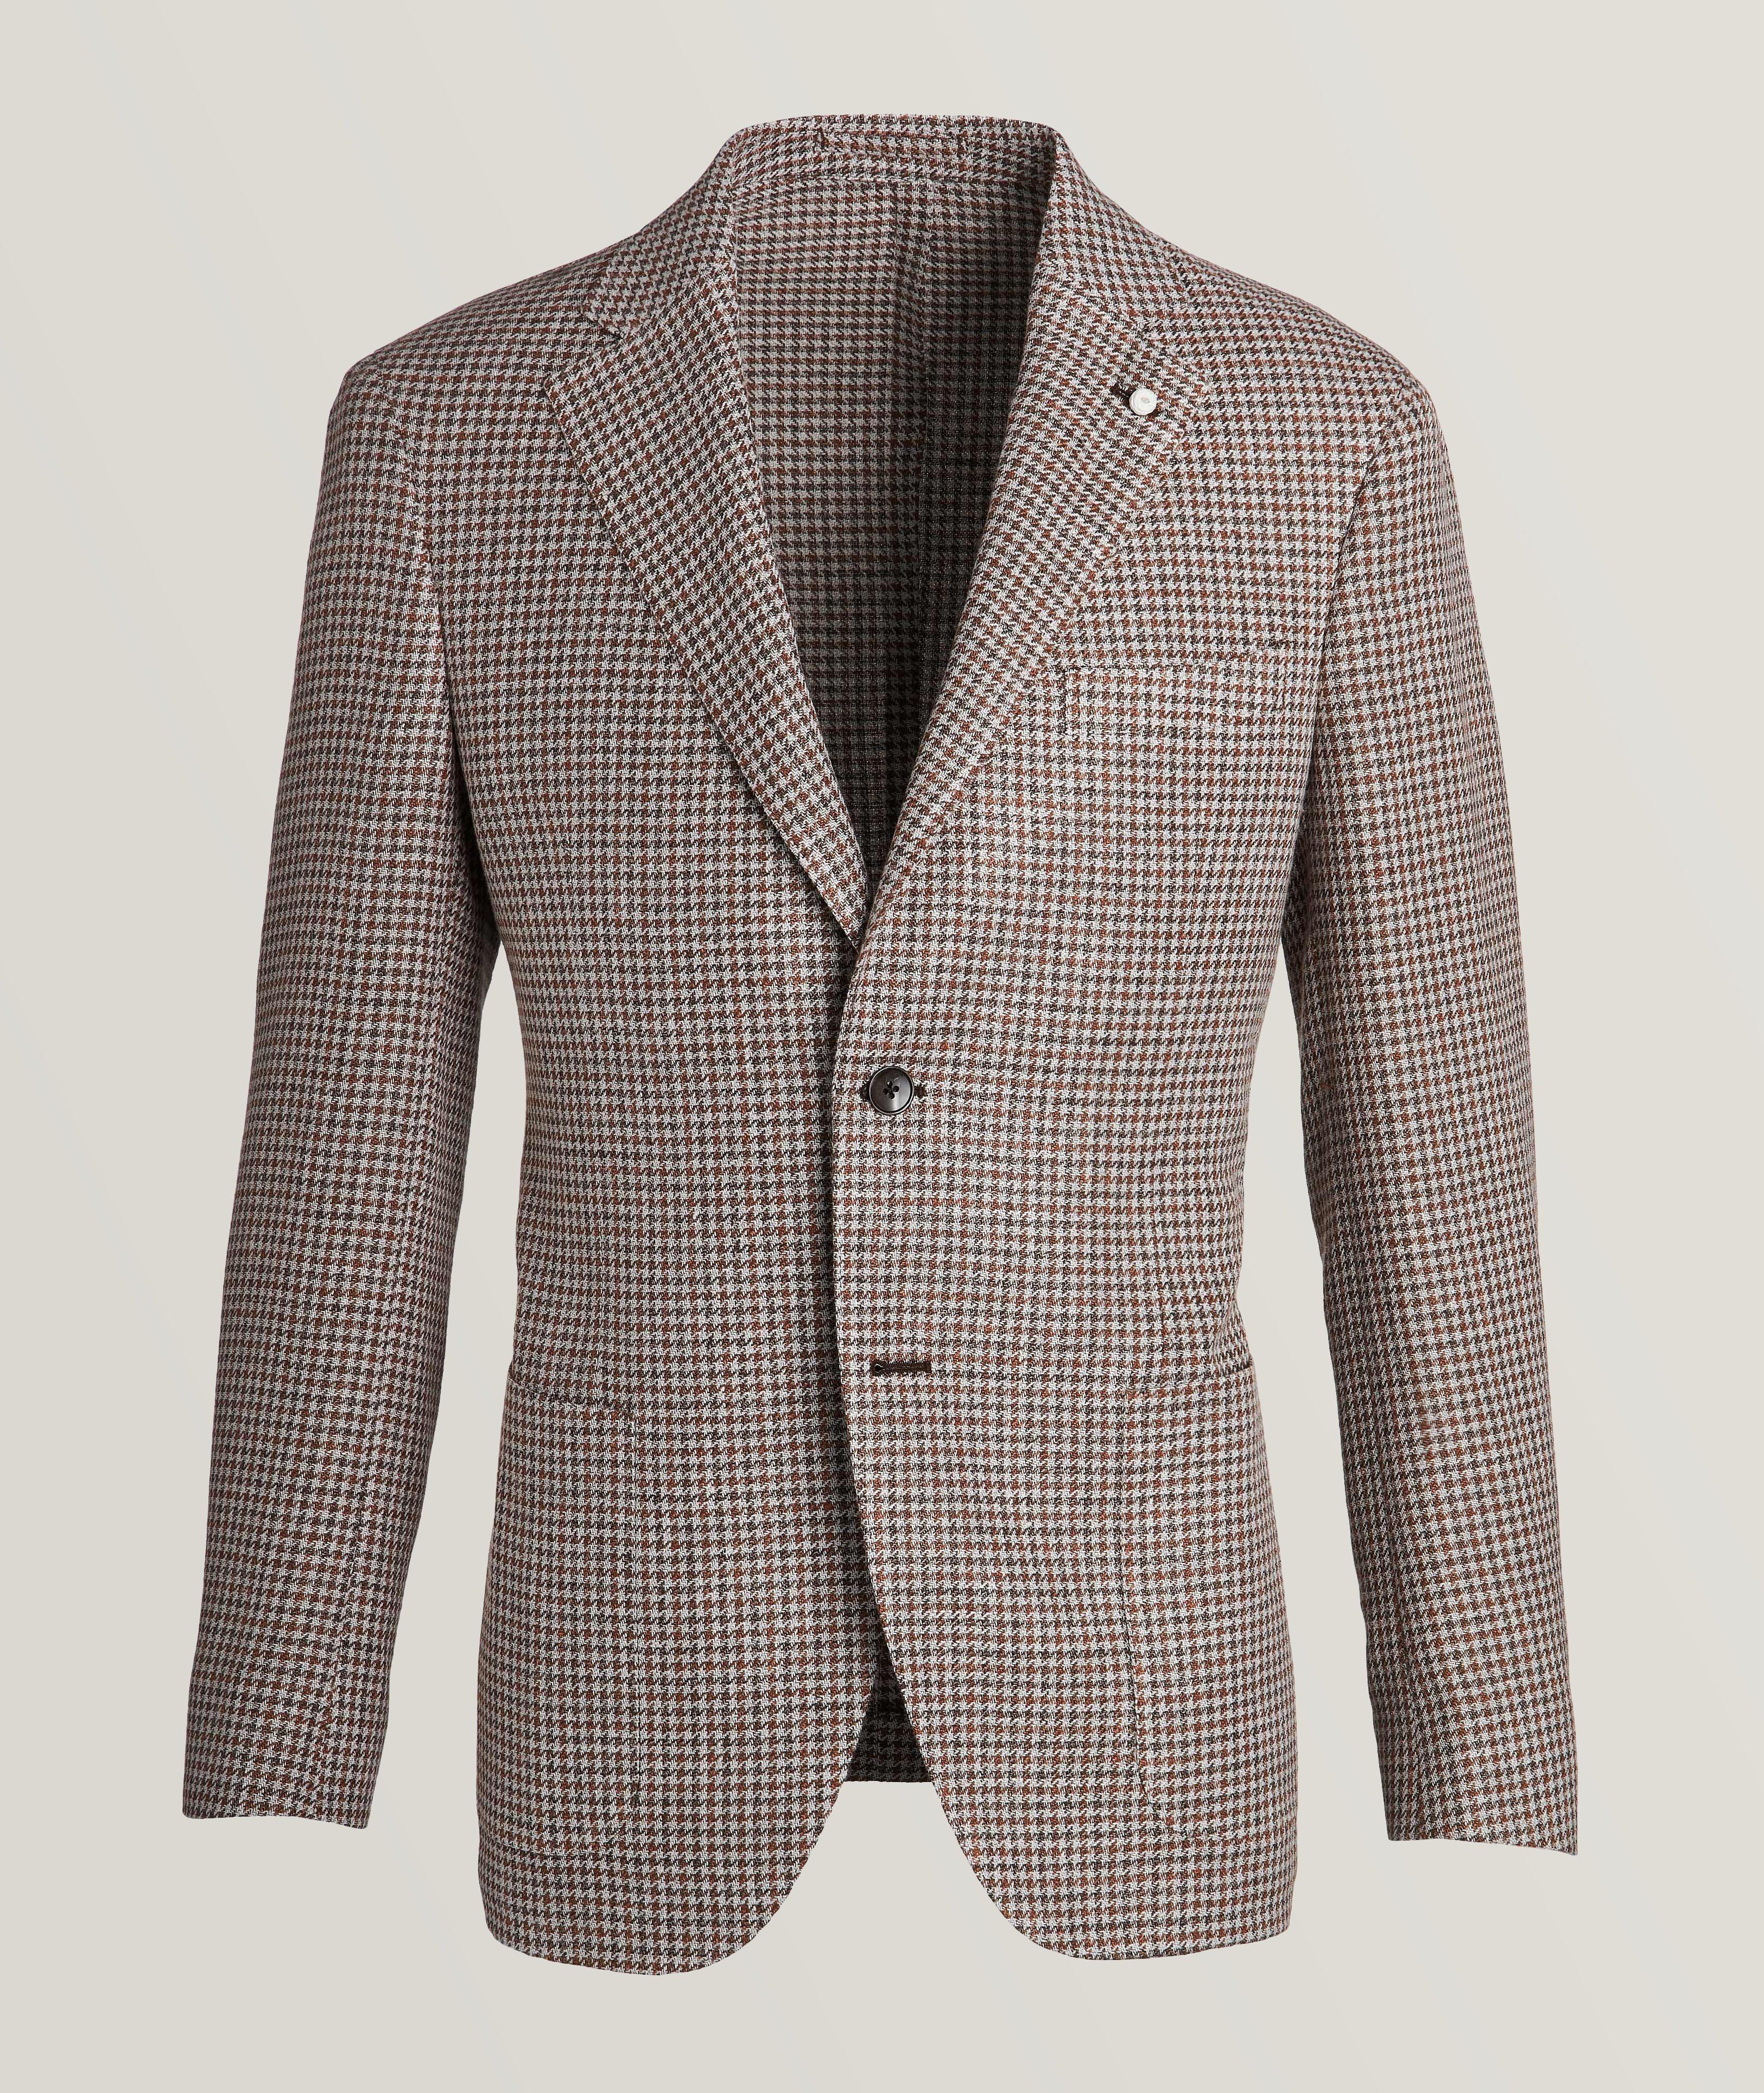 Herringbone Flax, Silk & Cotton Sport Jacket image 0